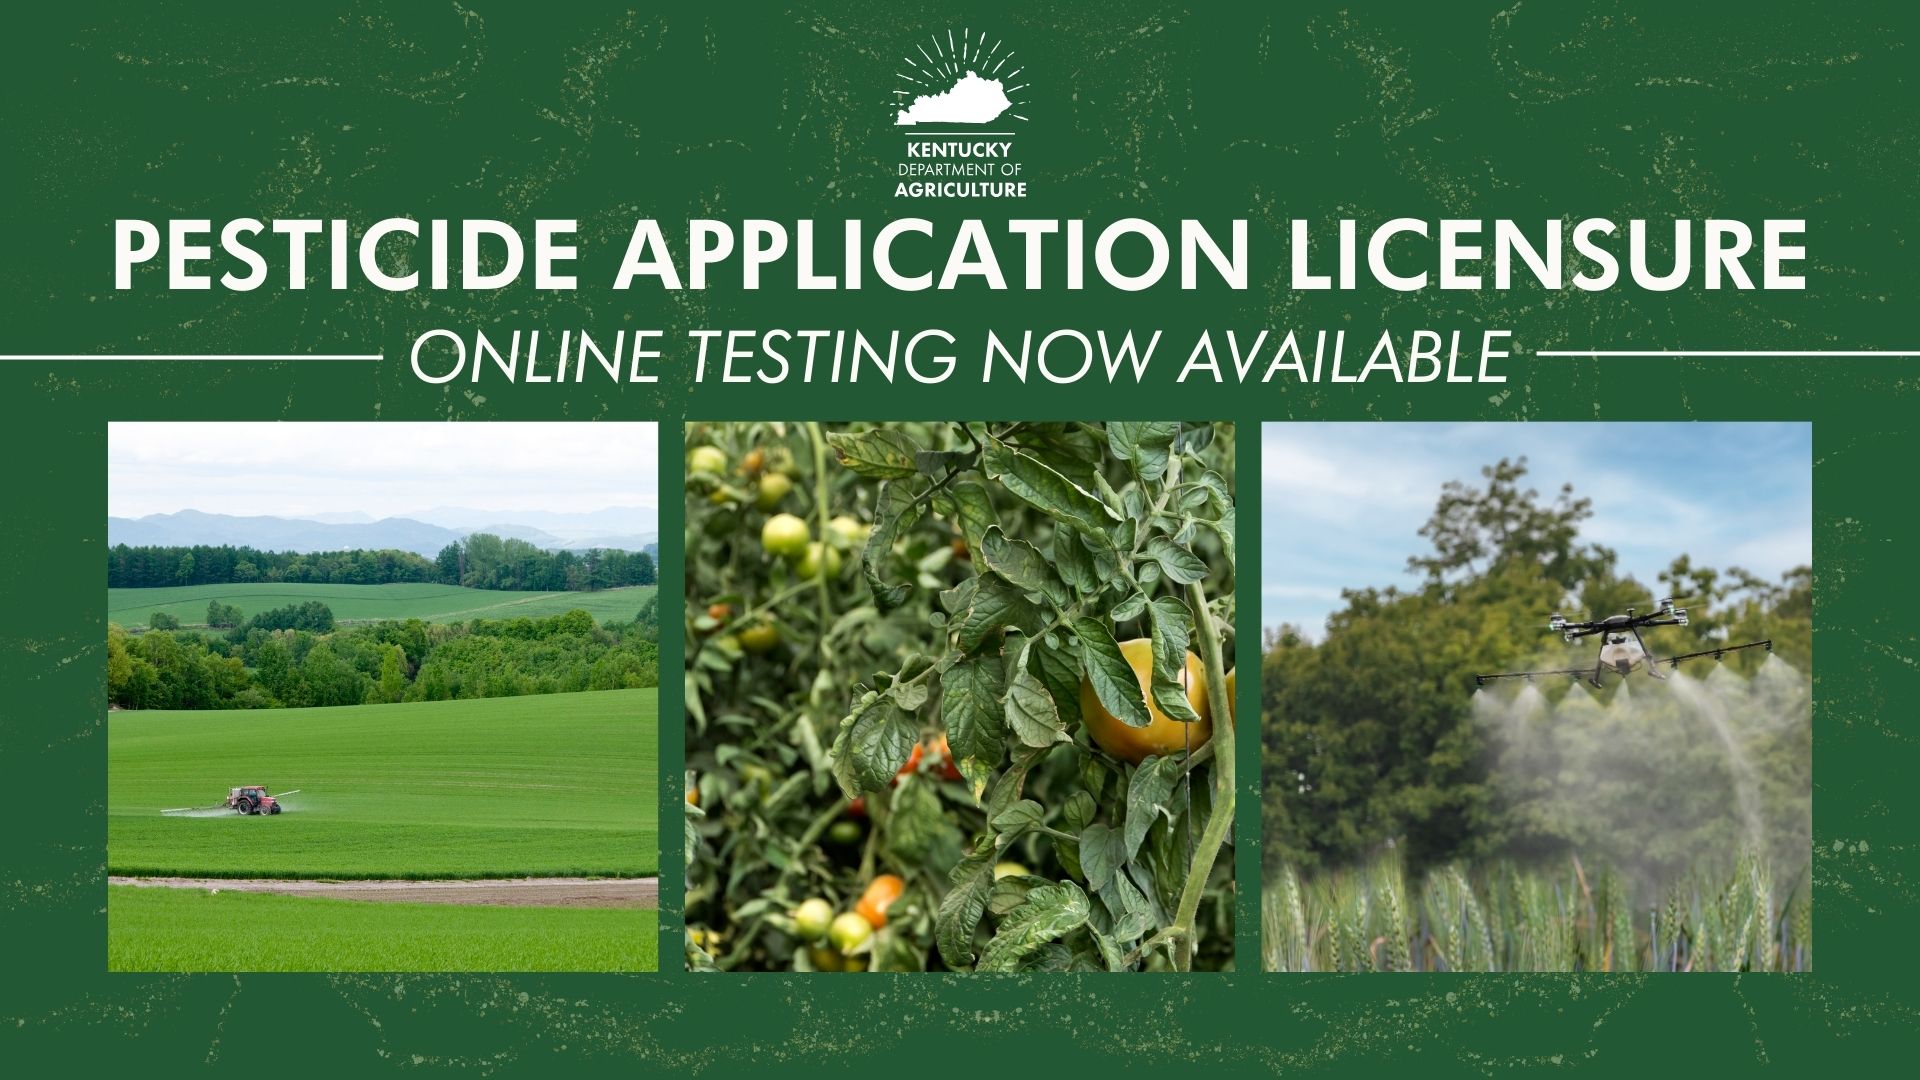 Online testing for pesticide application licensing